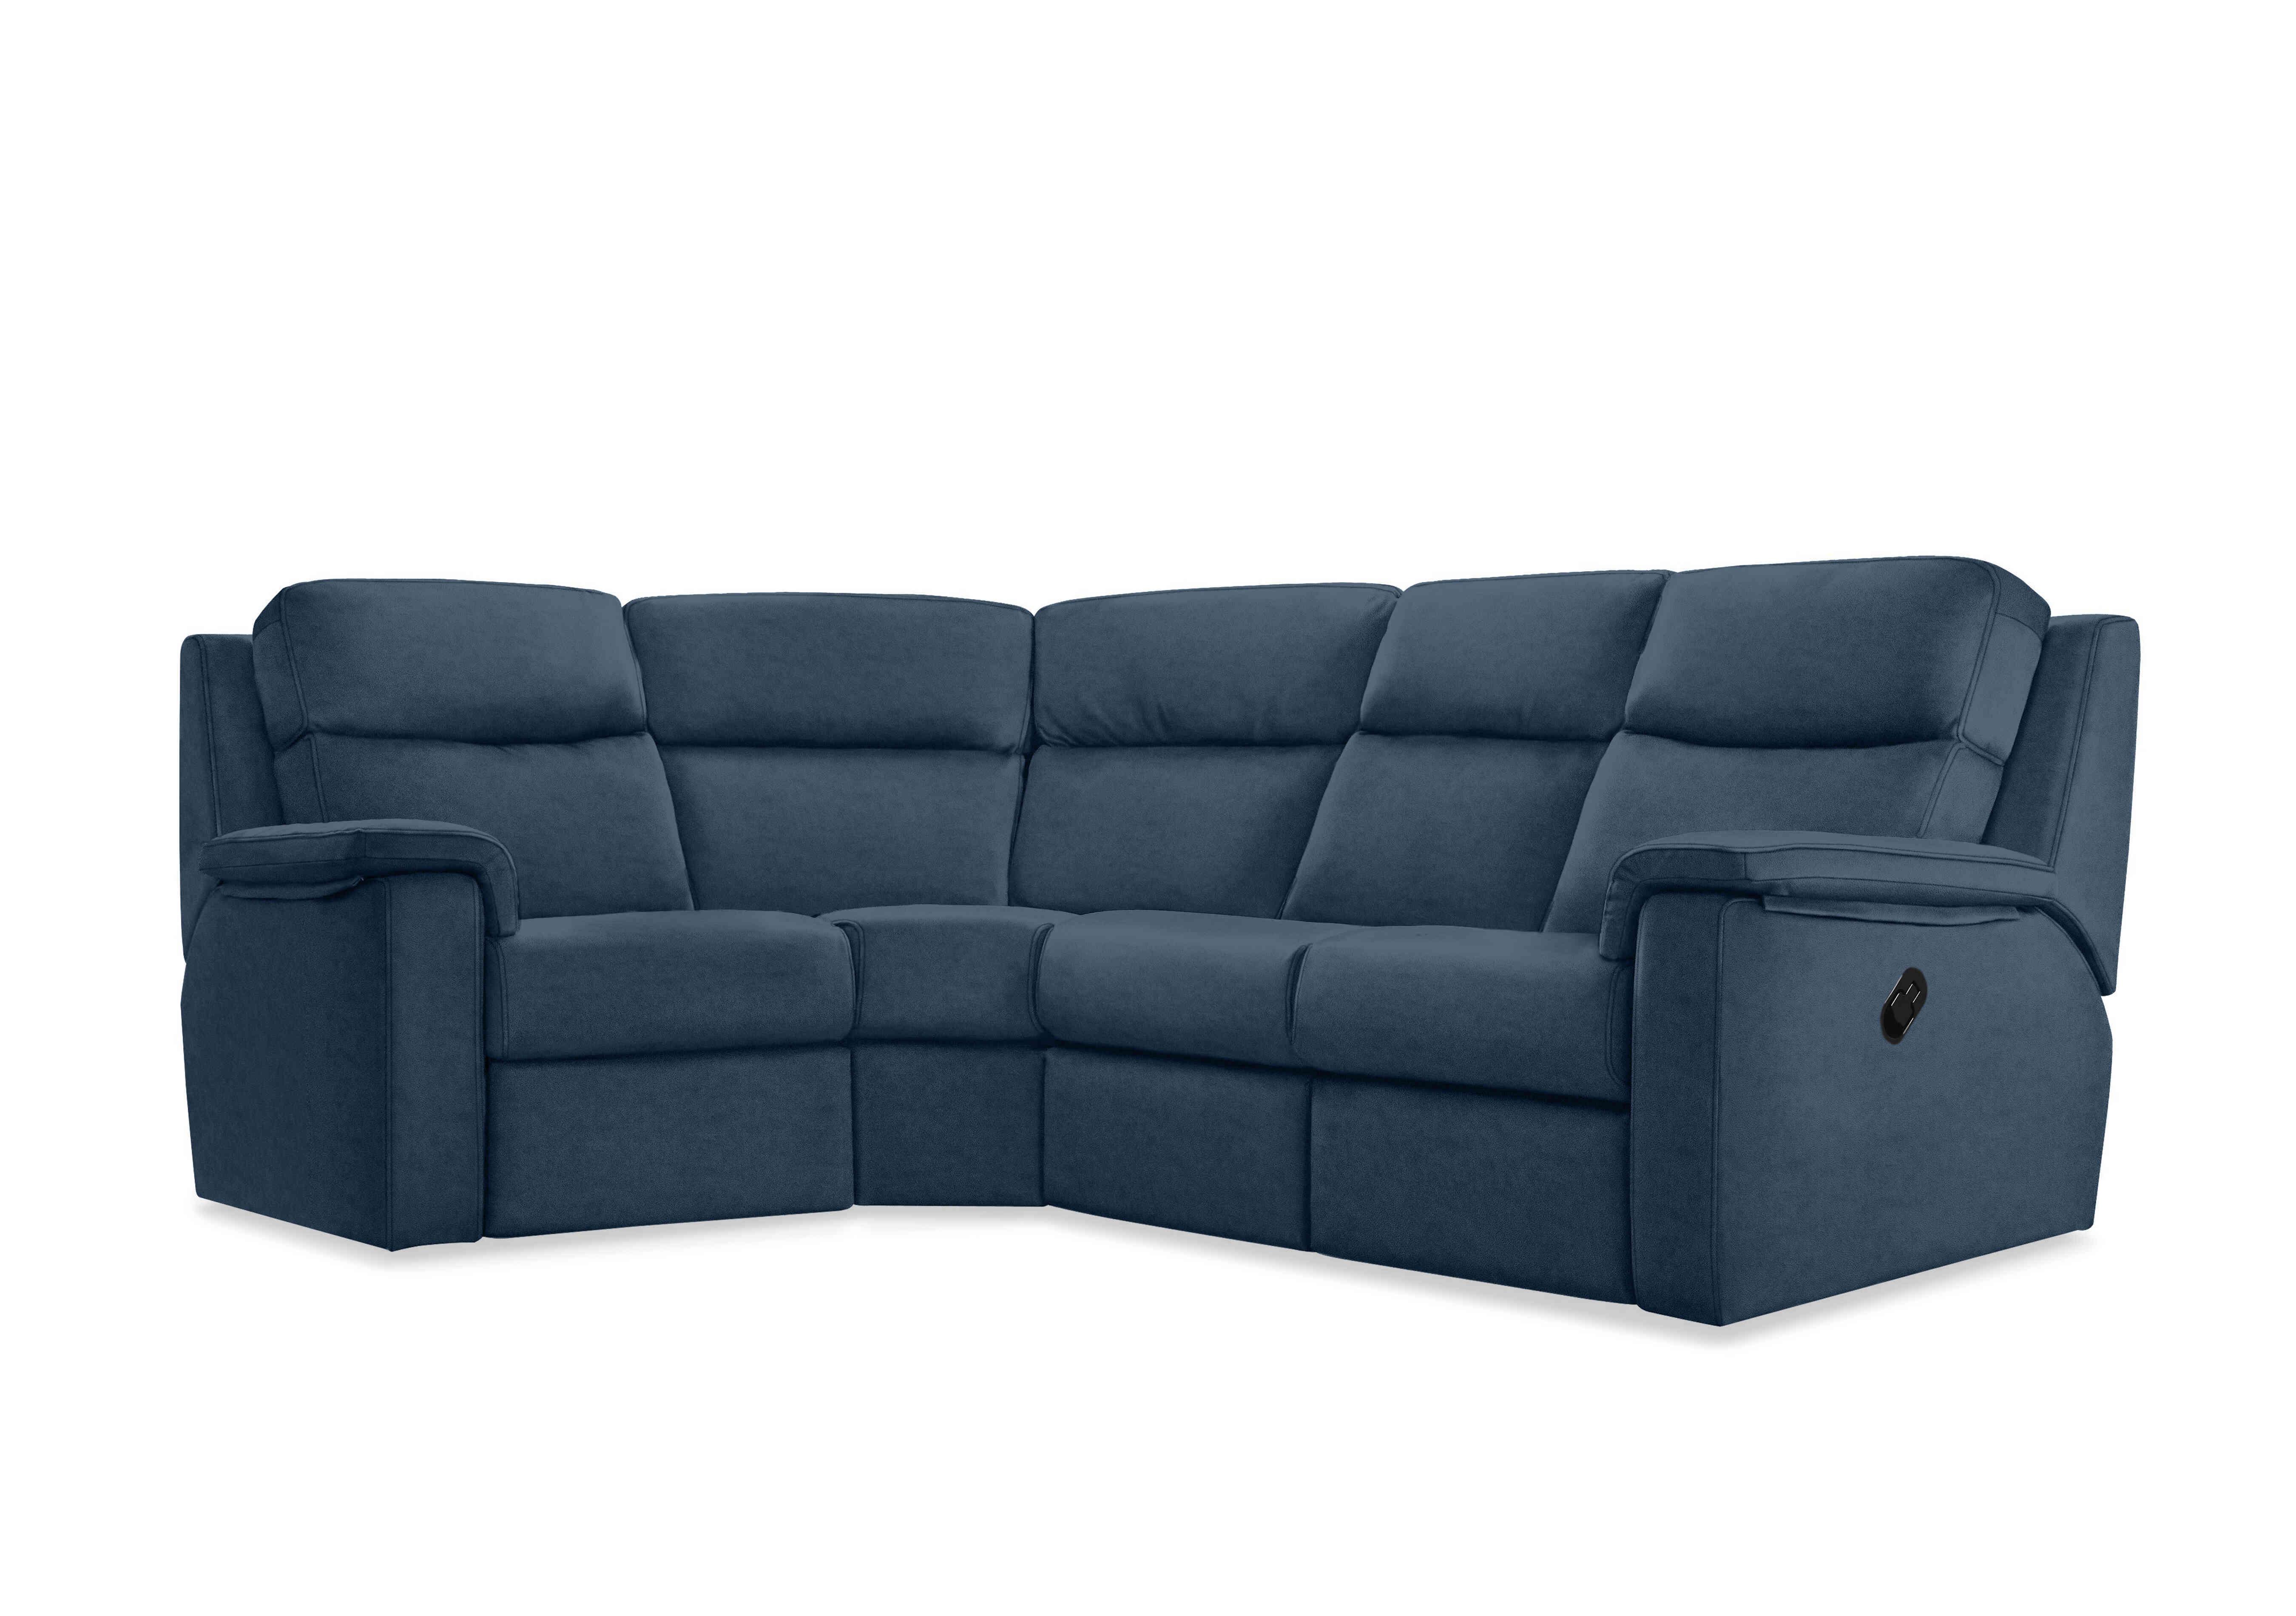 Thornbury Fabric Manual Recliner Corner Sofa in A125 Stingray Indigo on Furniture Village